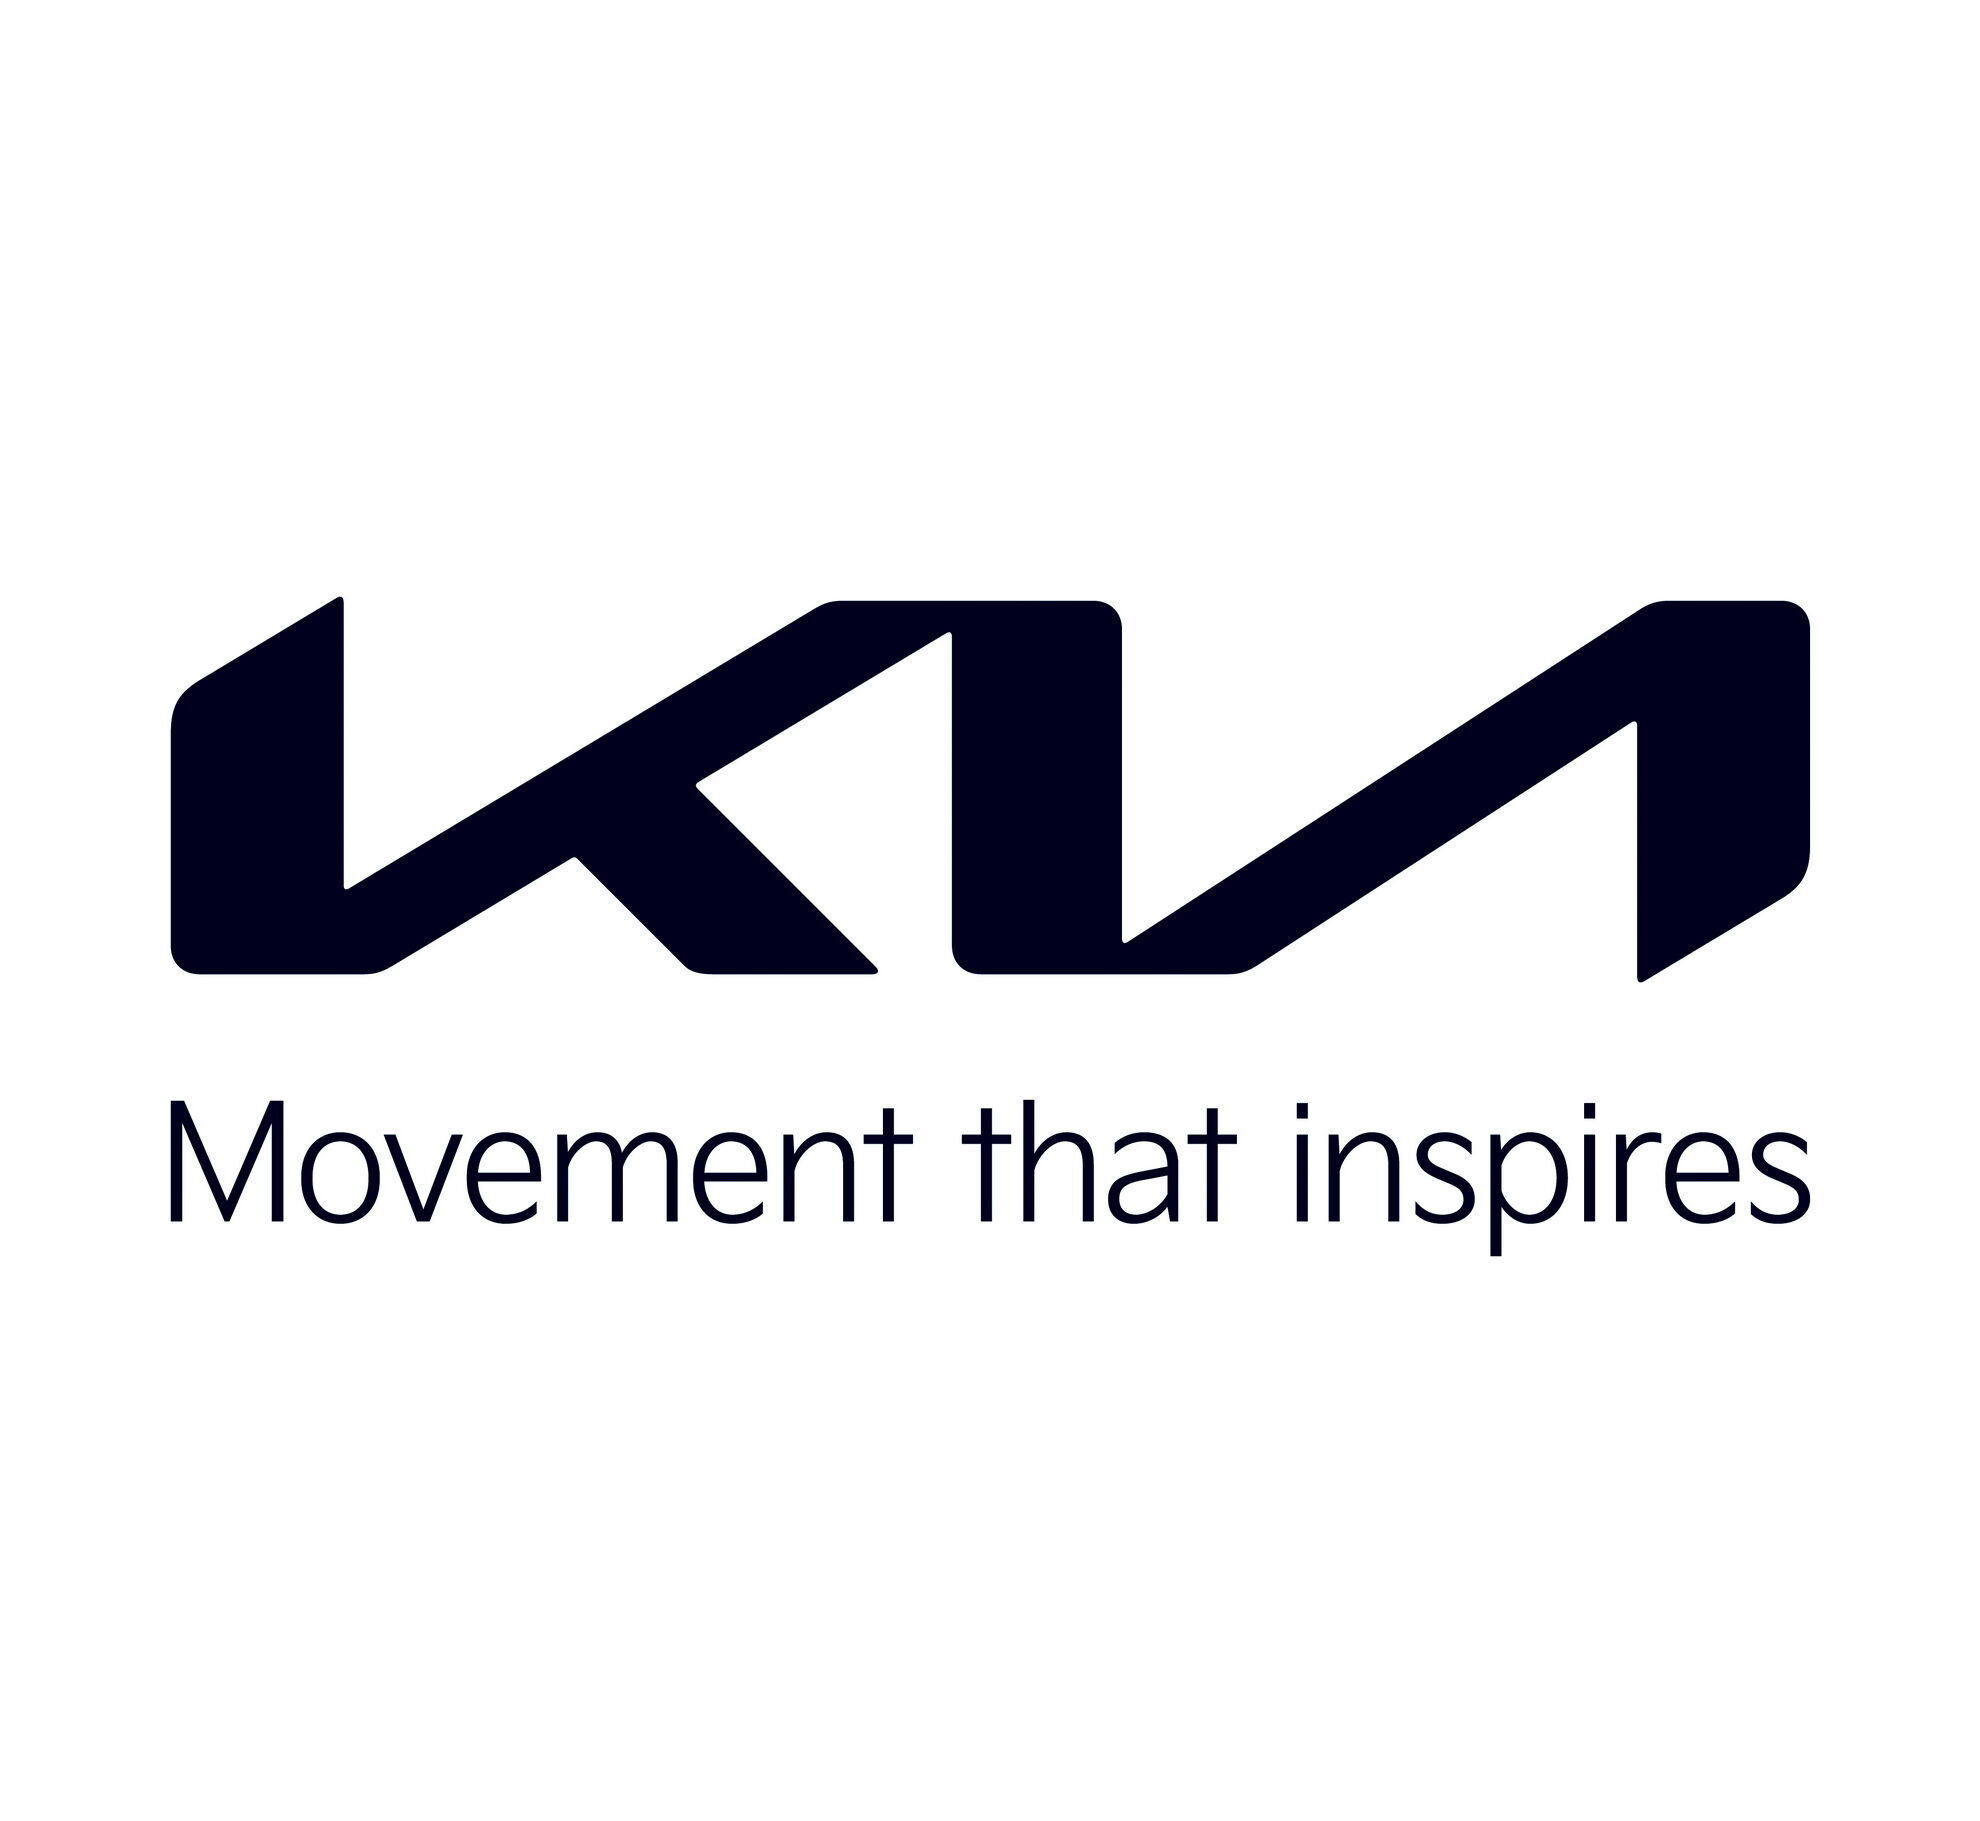 Новый логотип и слоган компании Kia